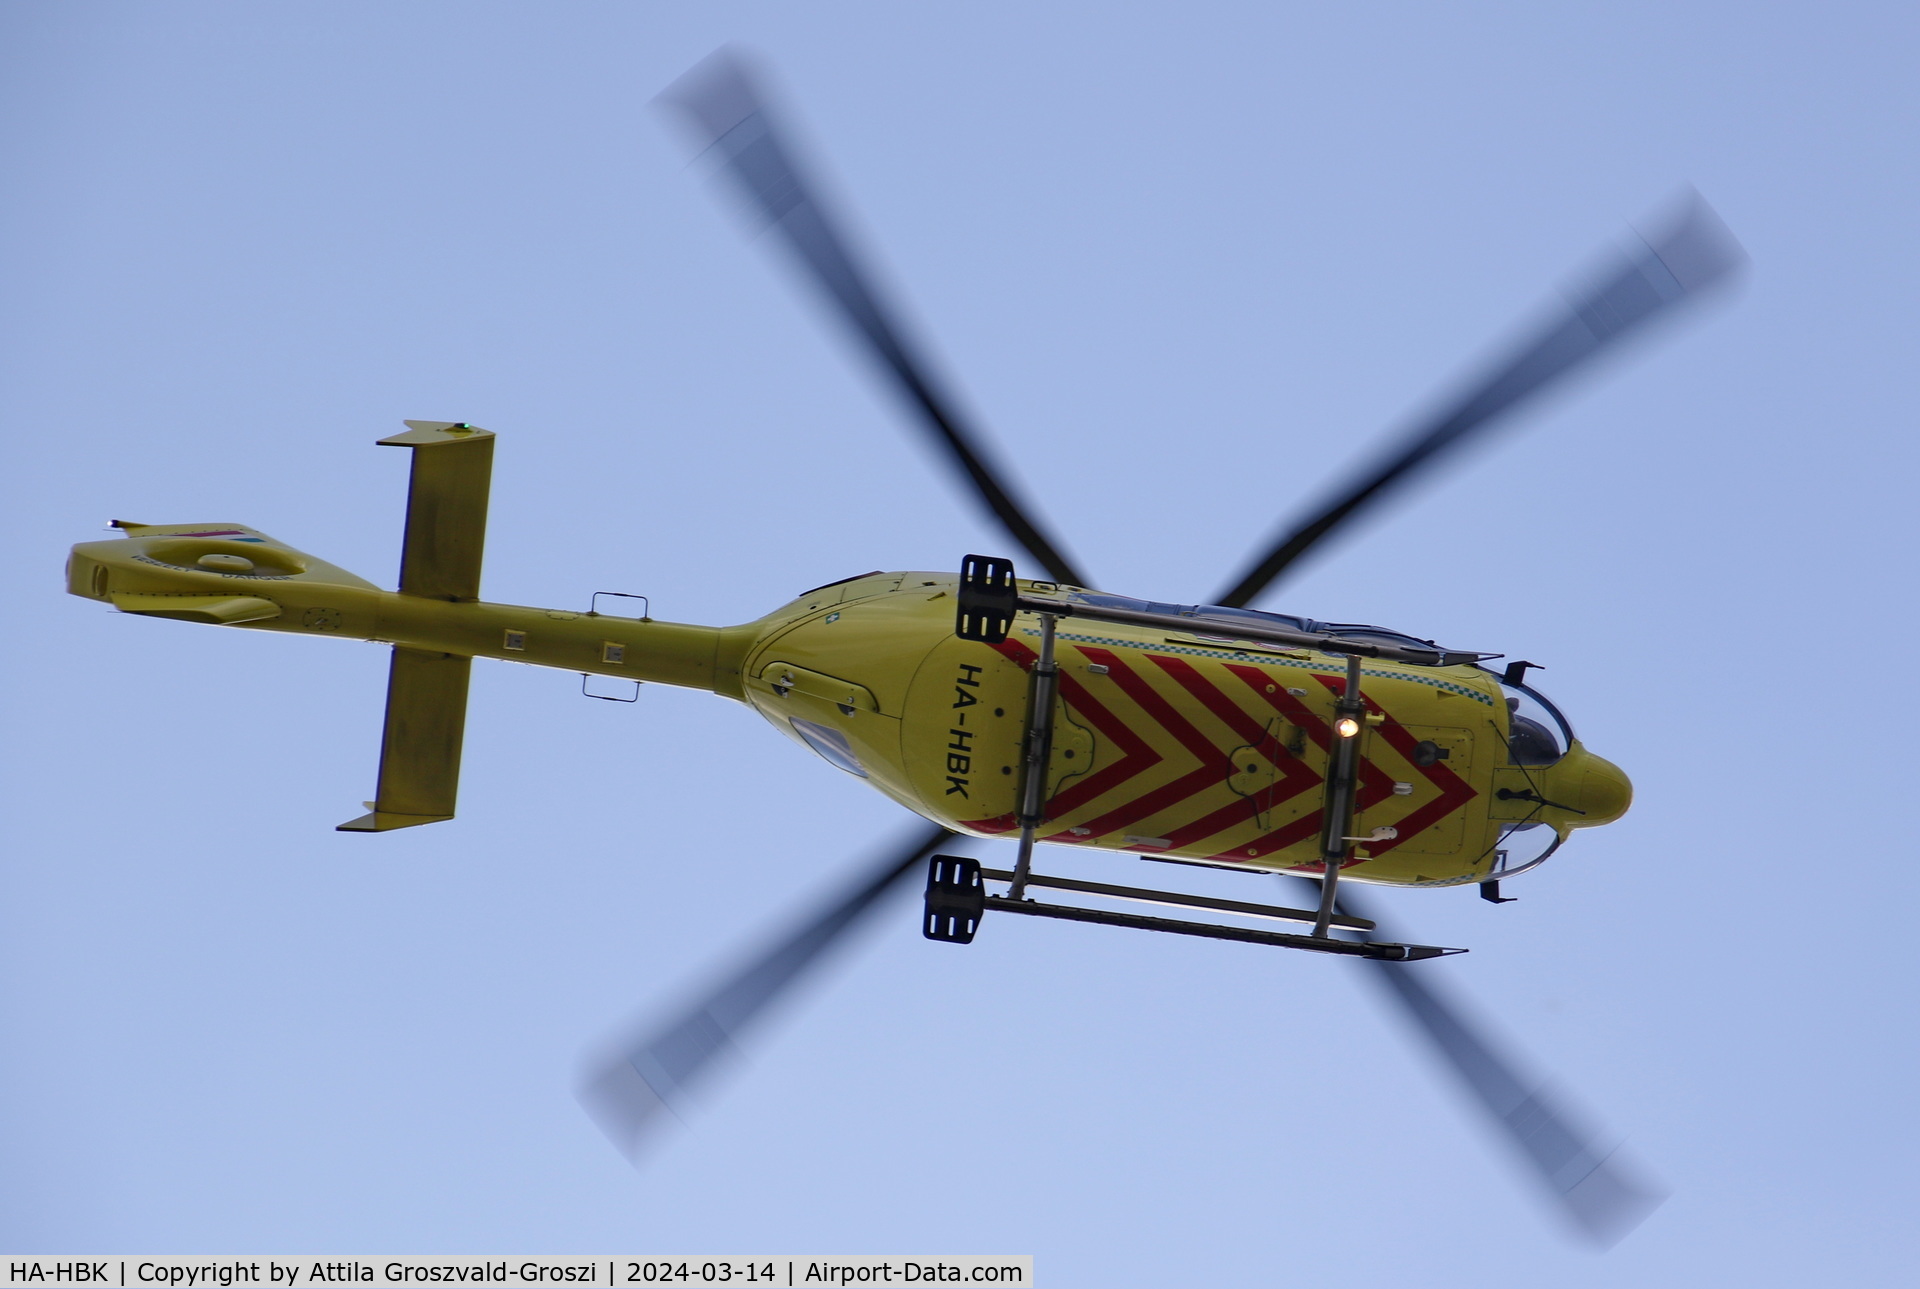 HA-HBK, 2018 Eurocopter EC-135-P2+ C/N 0393, Veszprém Hospital Helicopter Landing Dock, Hungary